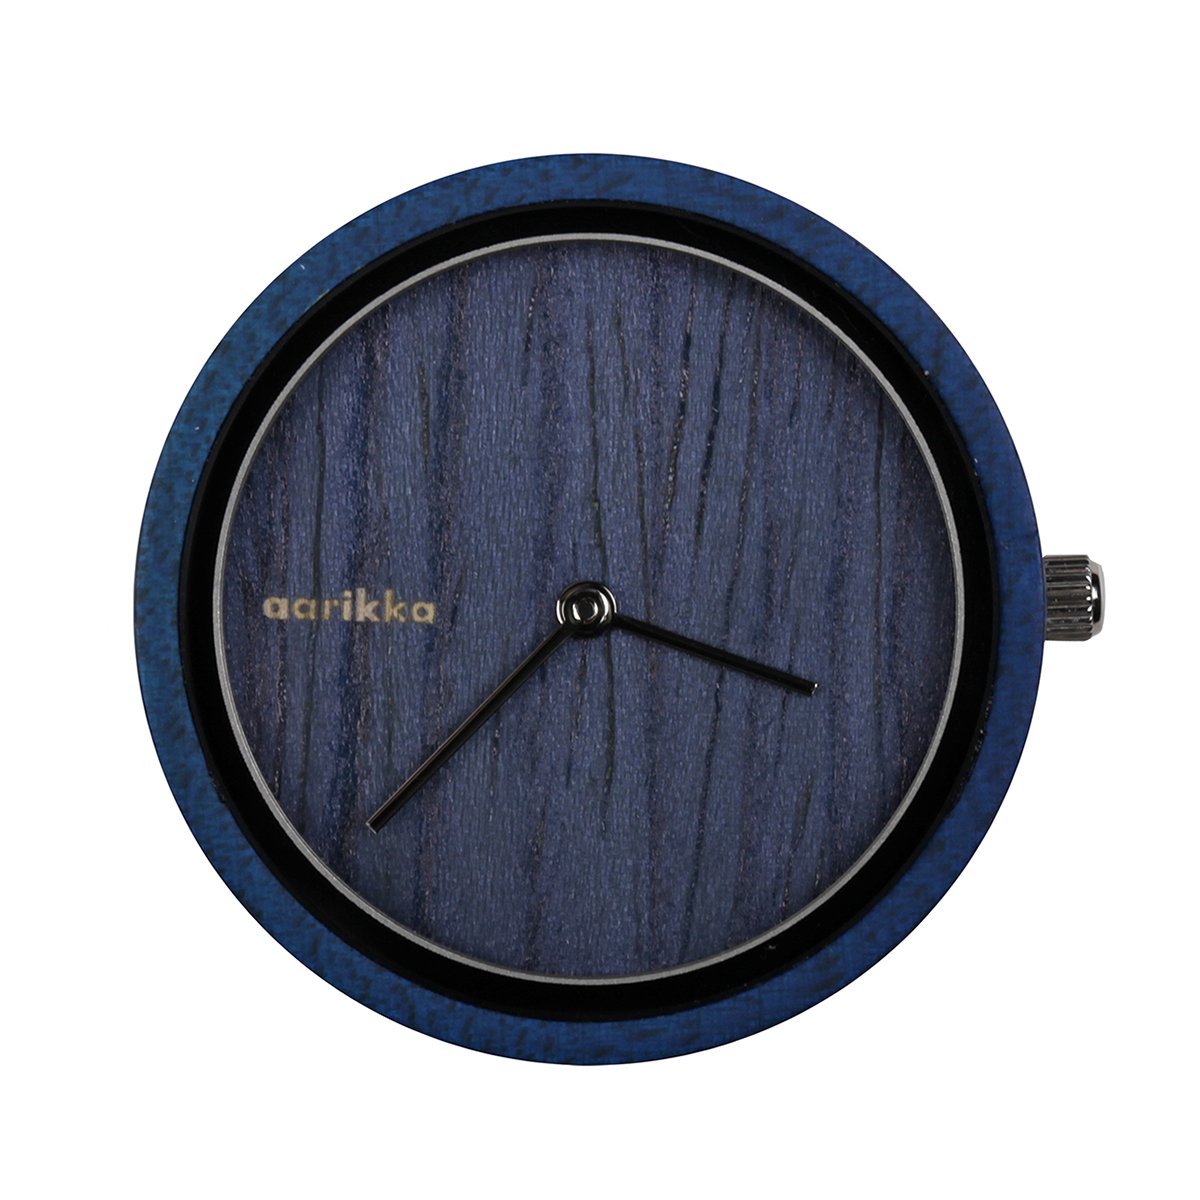 Aikapuu clock face, small, blue